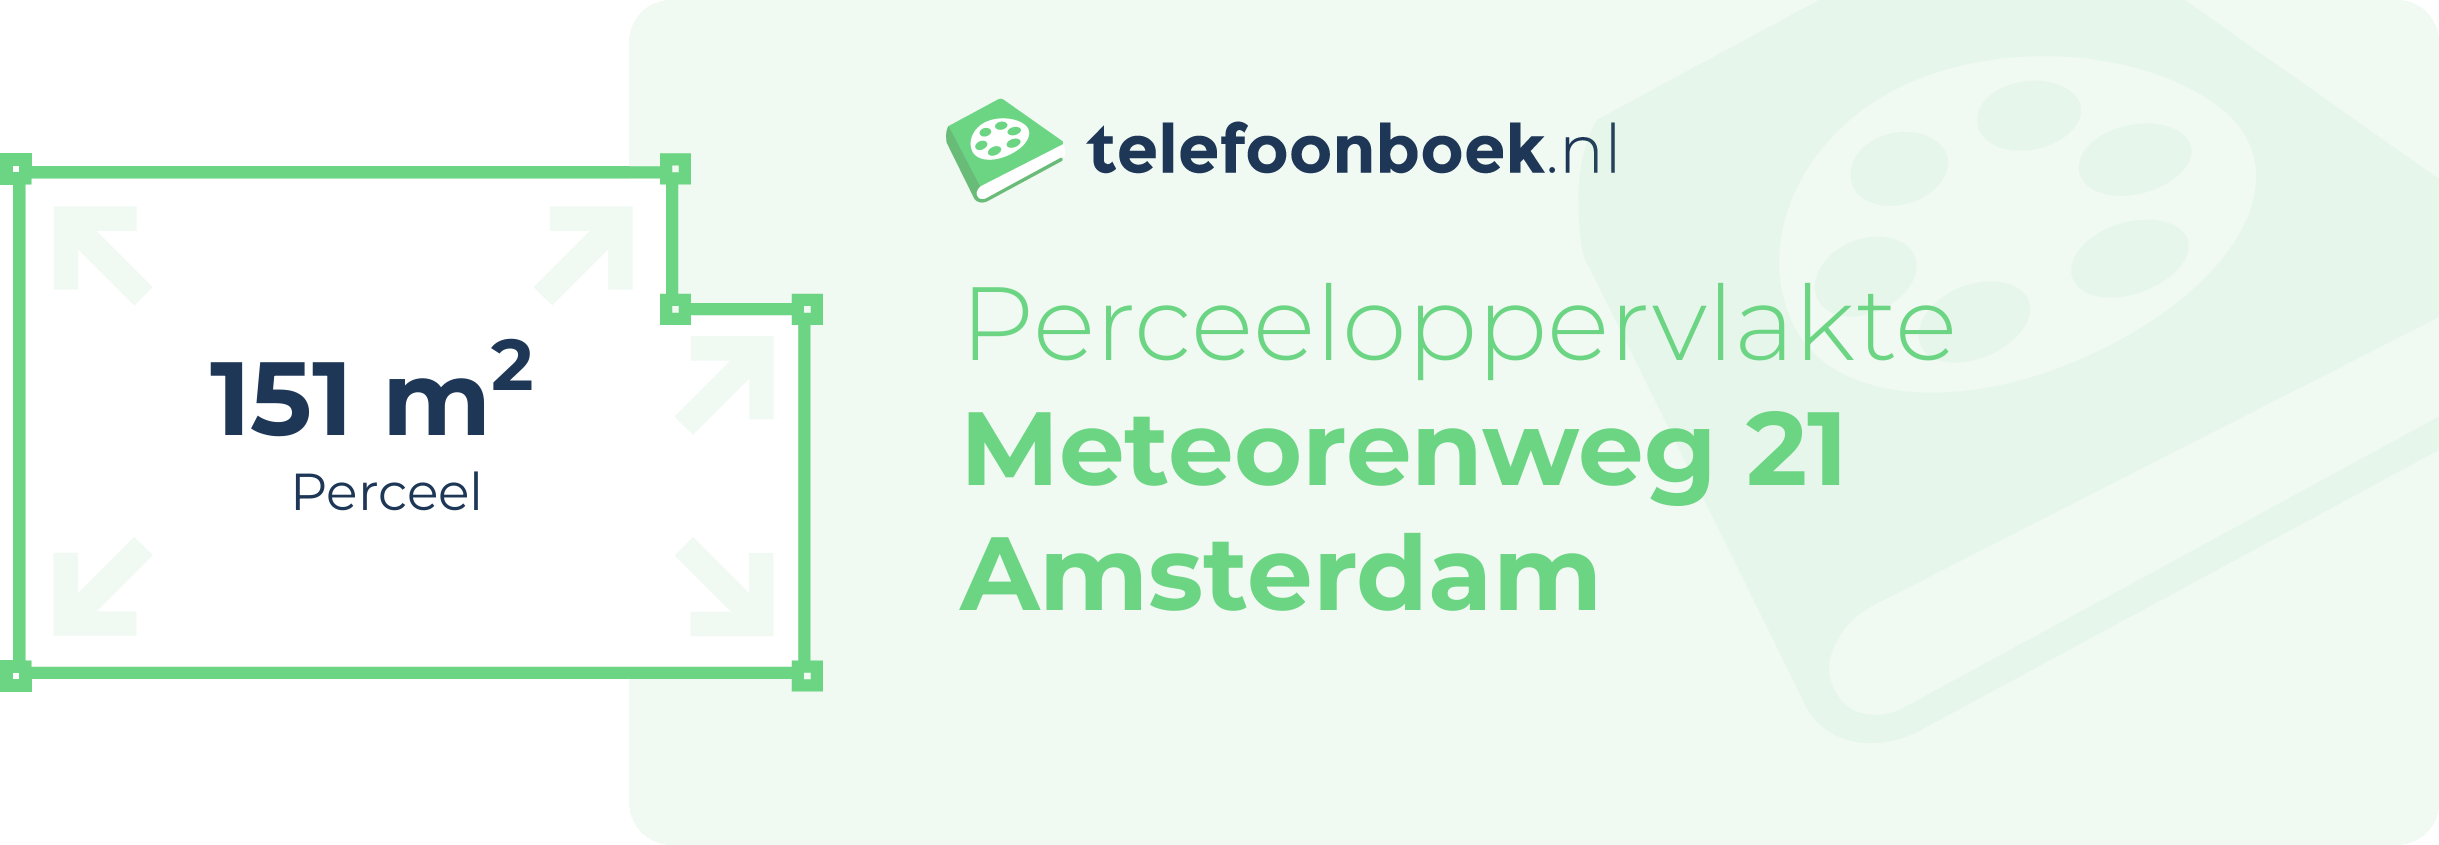 Perceeloppervlakte Meteorenweg 21 Amsterdam